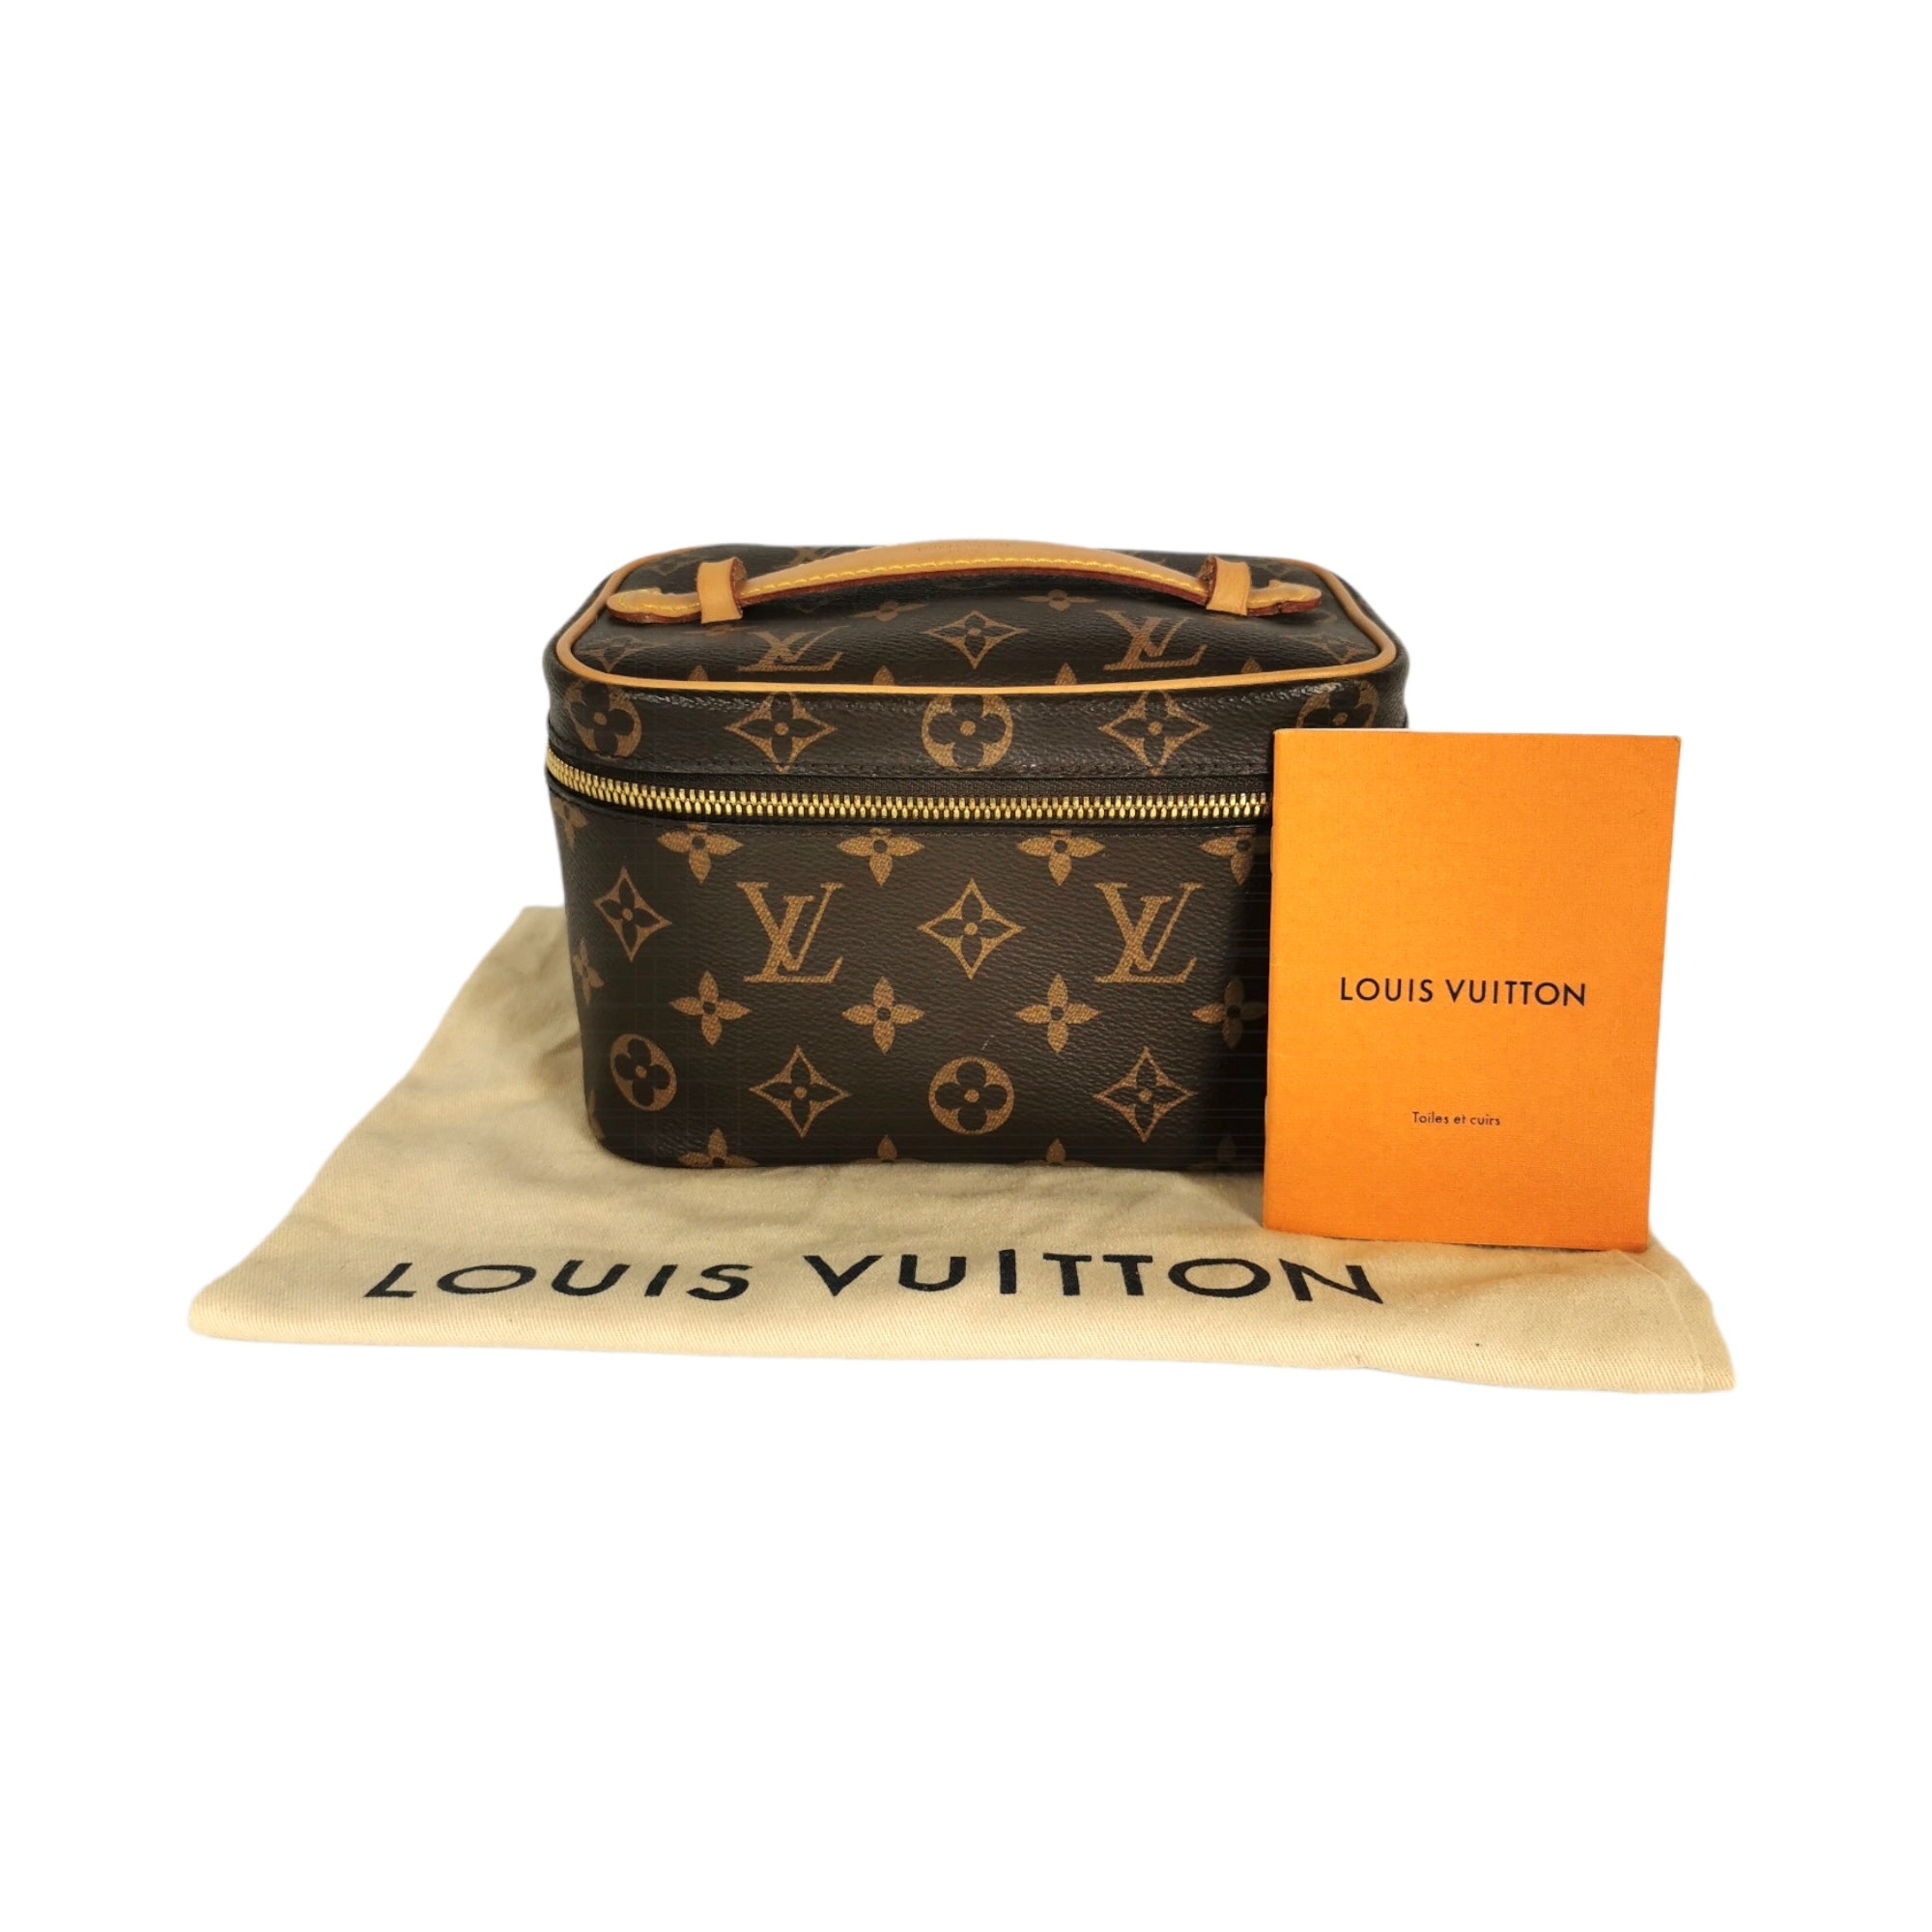 Gucci VS Louis Vuitton (AirPods Pro Case Comparison) 